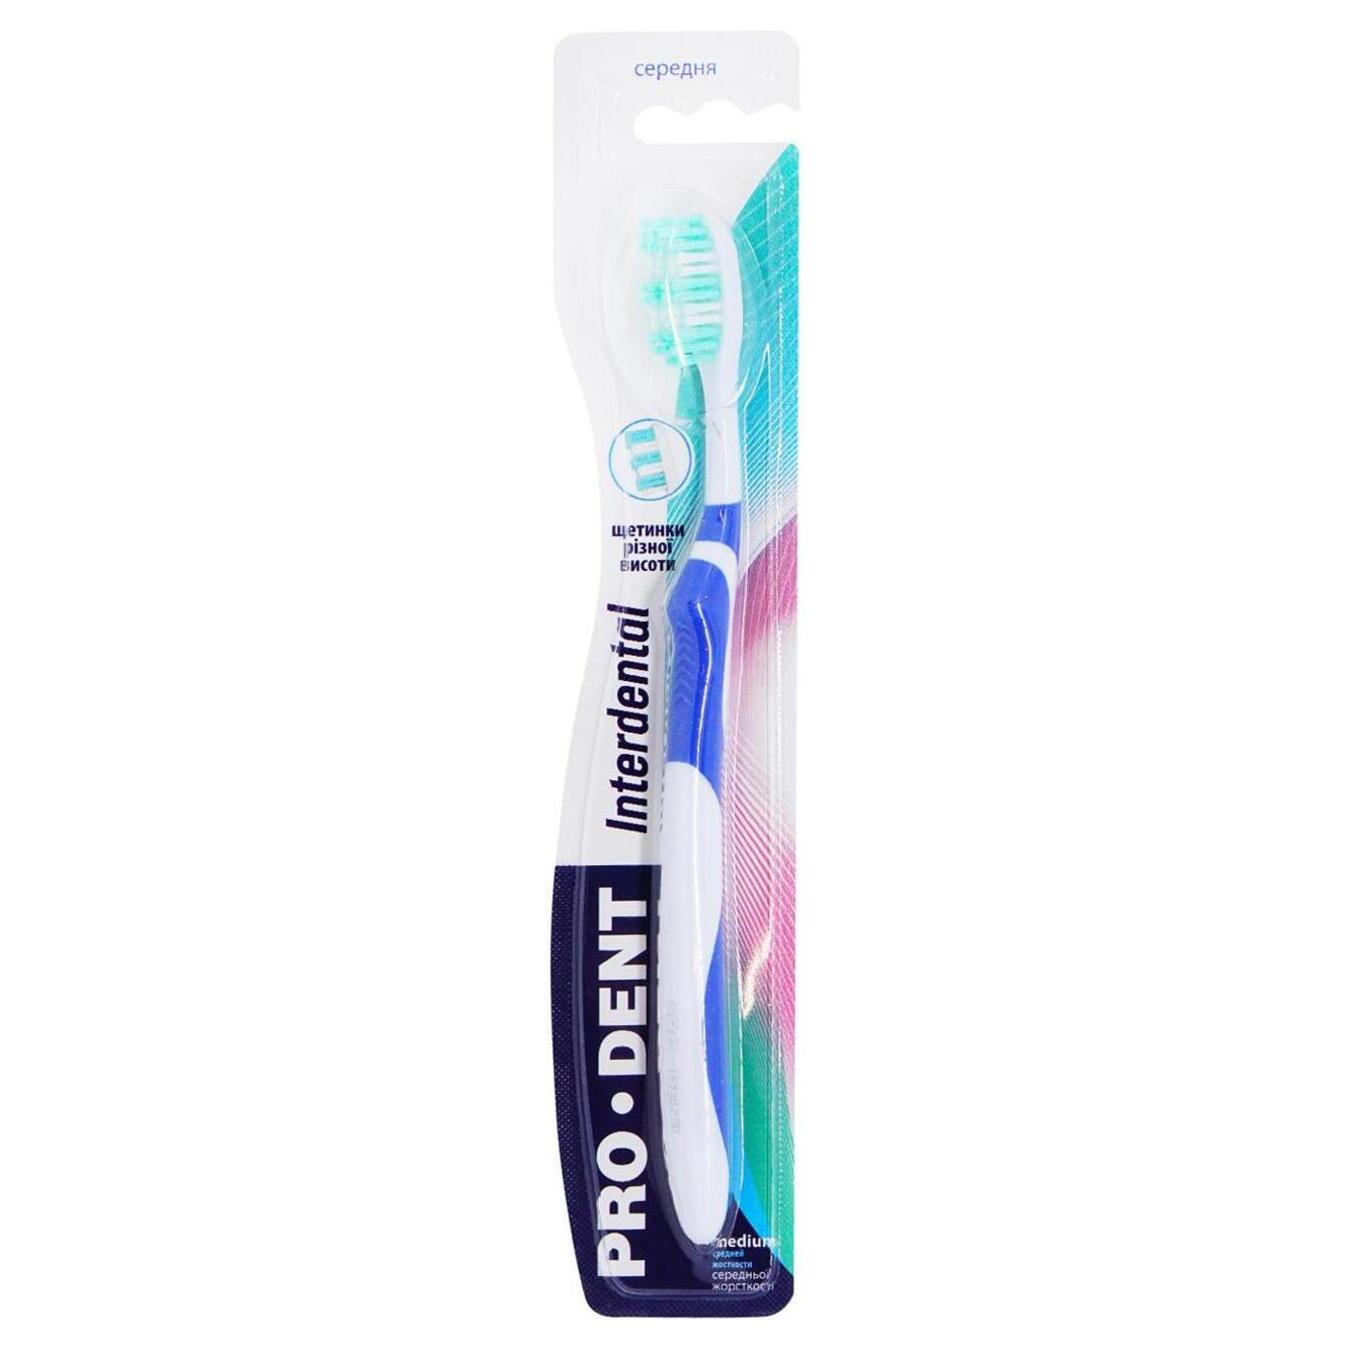 Toothbrush Pro Dent interdental medium hardness